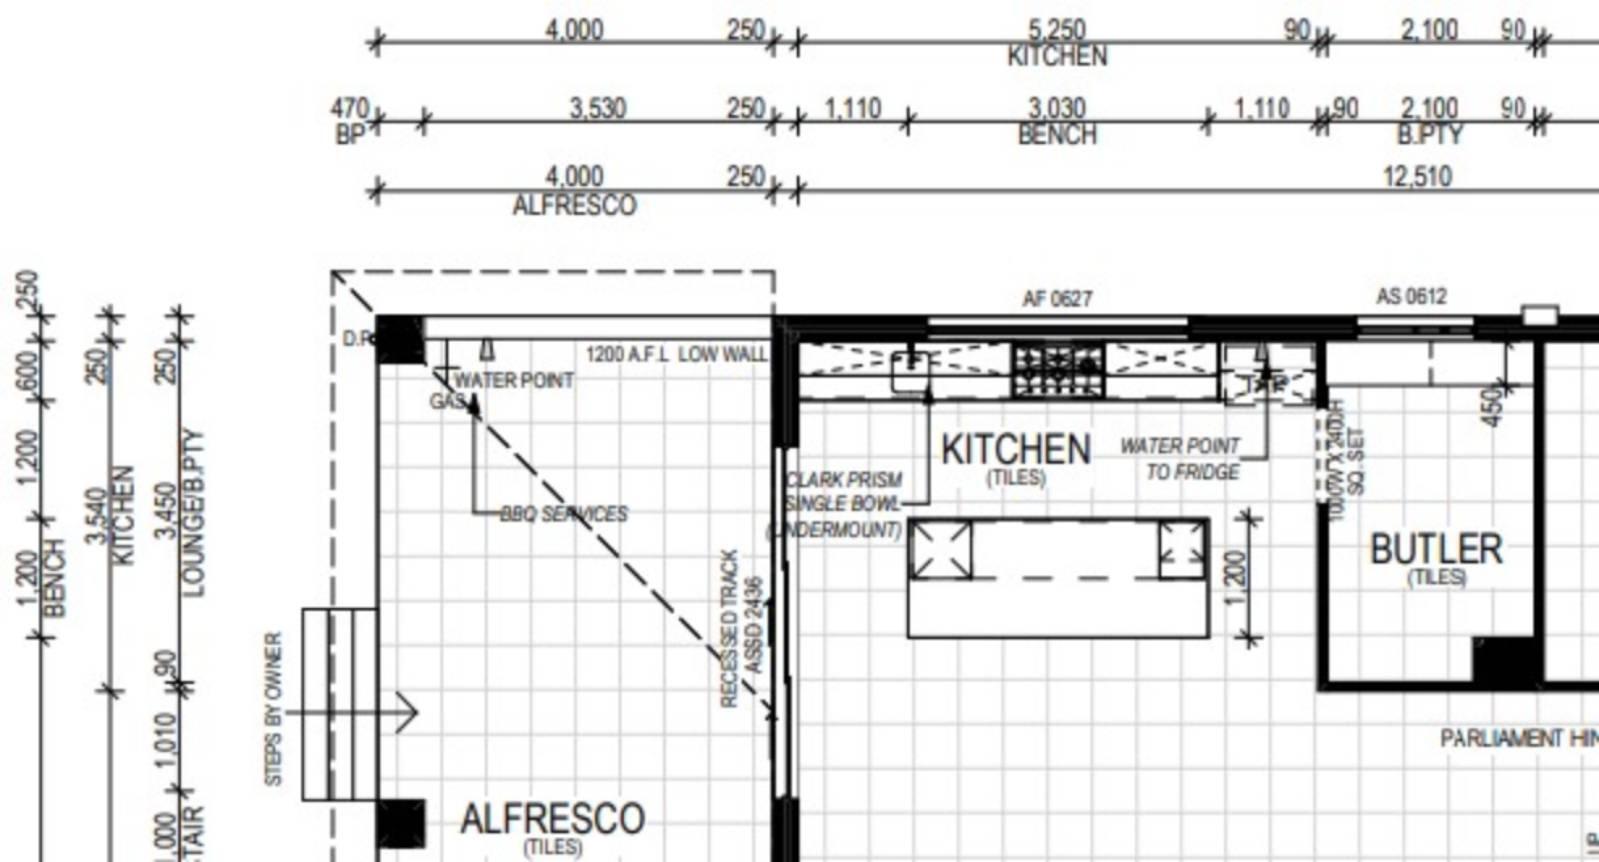 Seeking help with kitchen/butler pantry floorplan